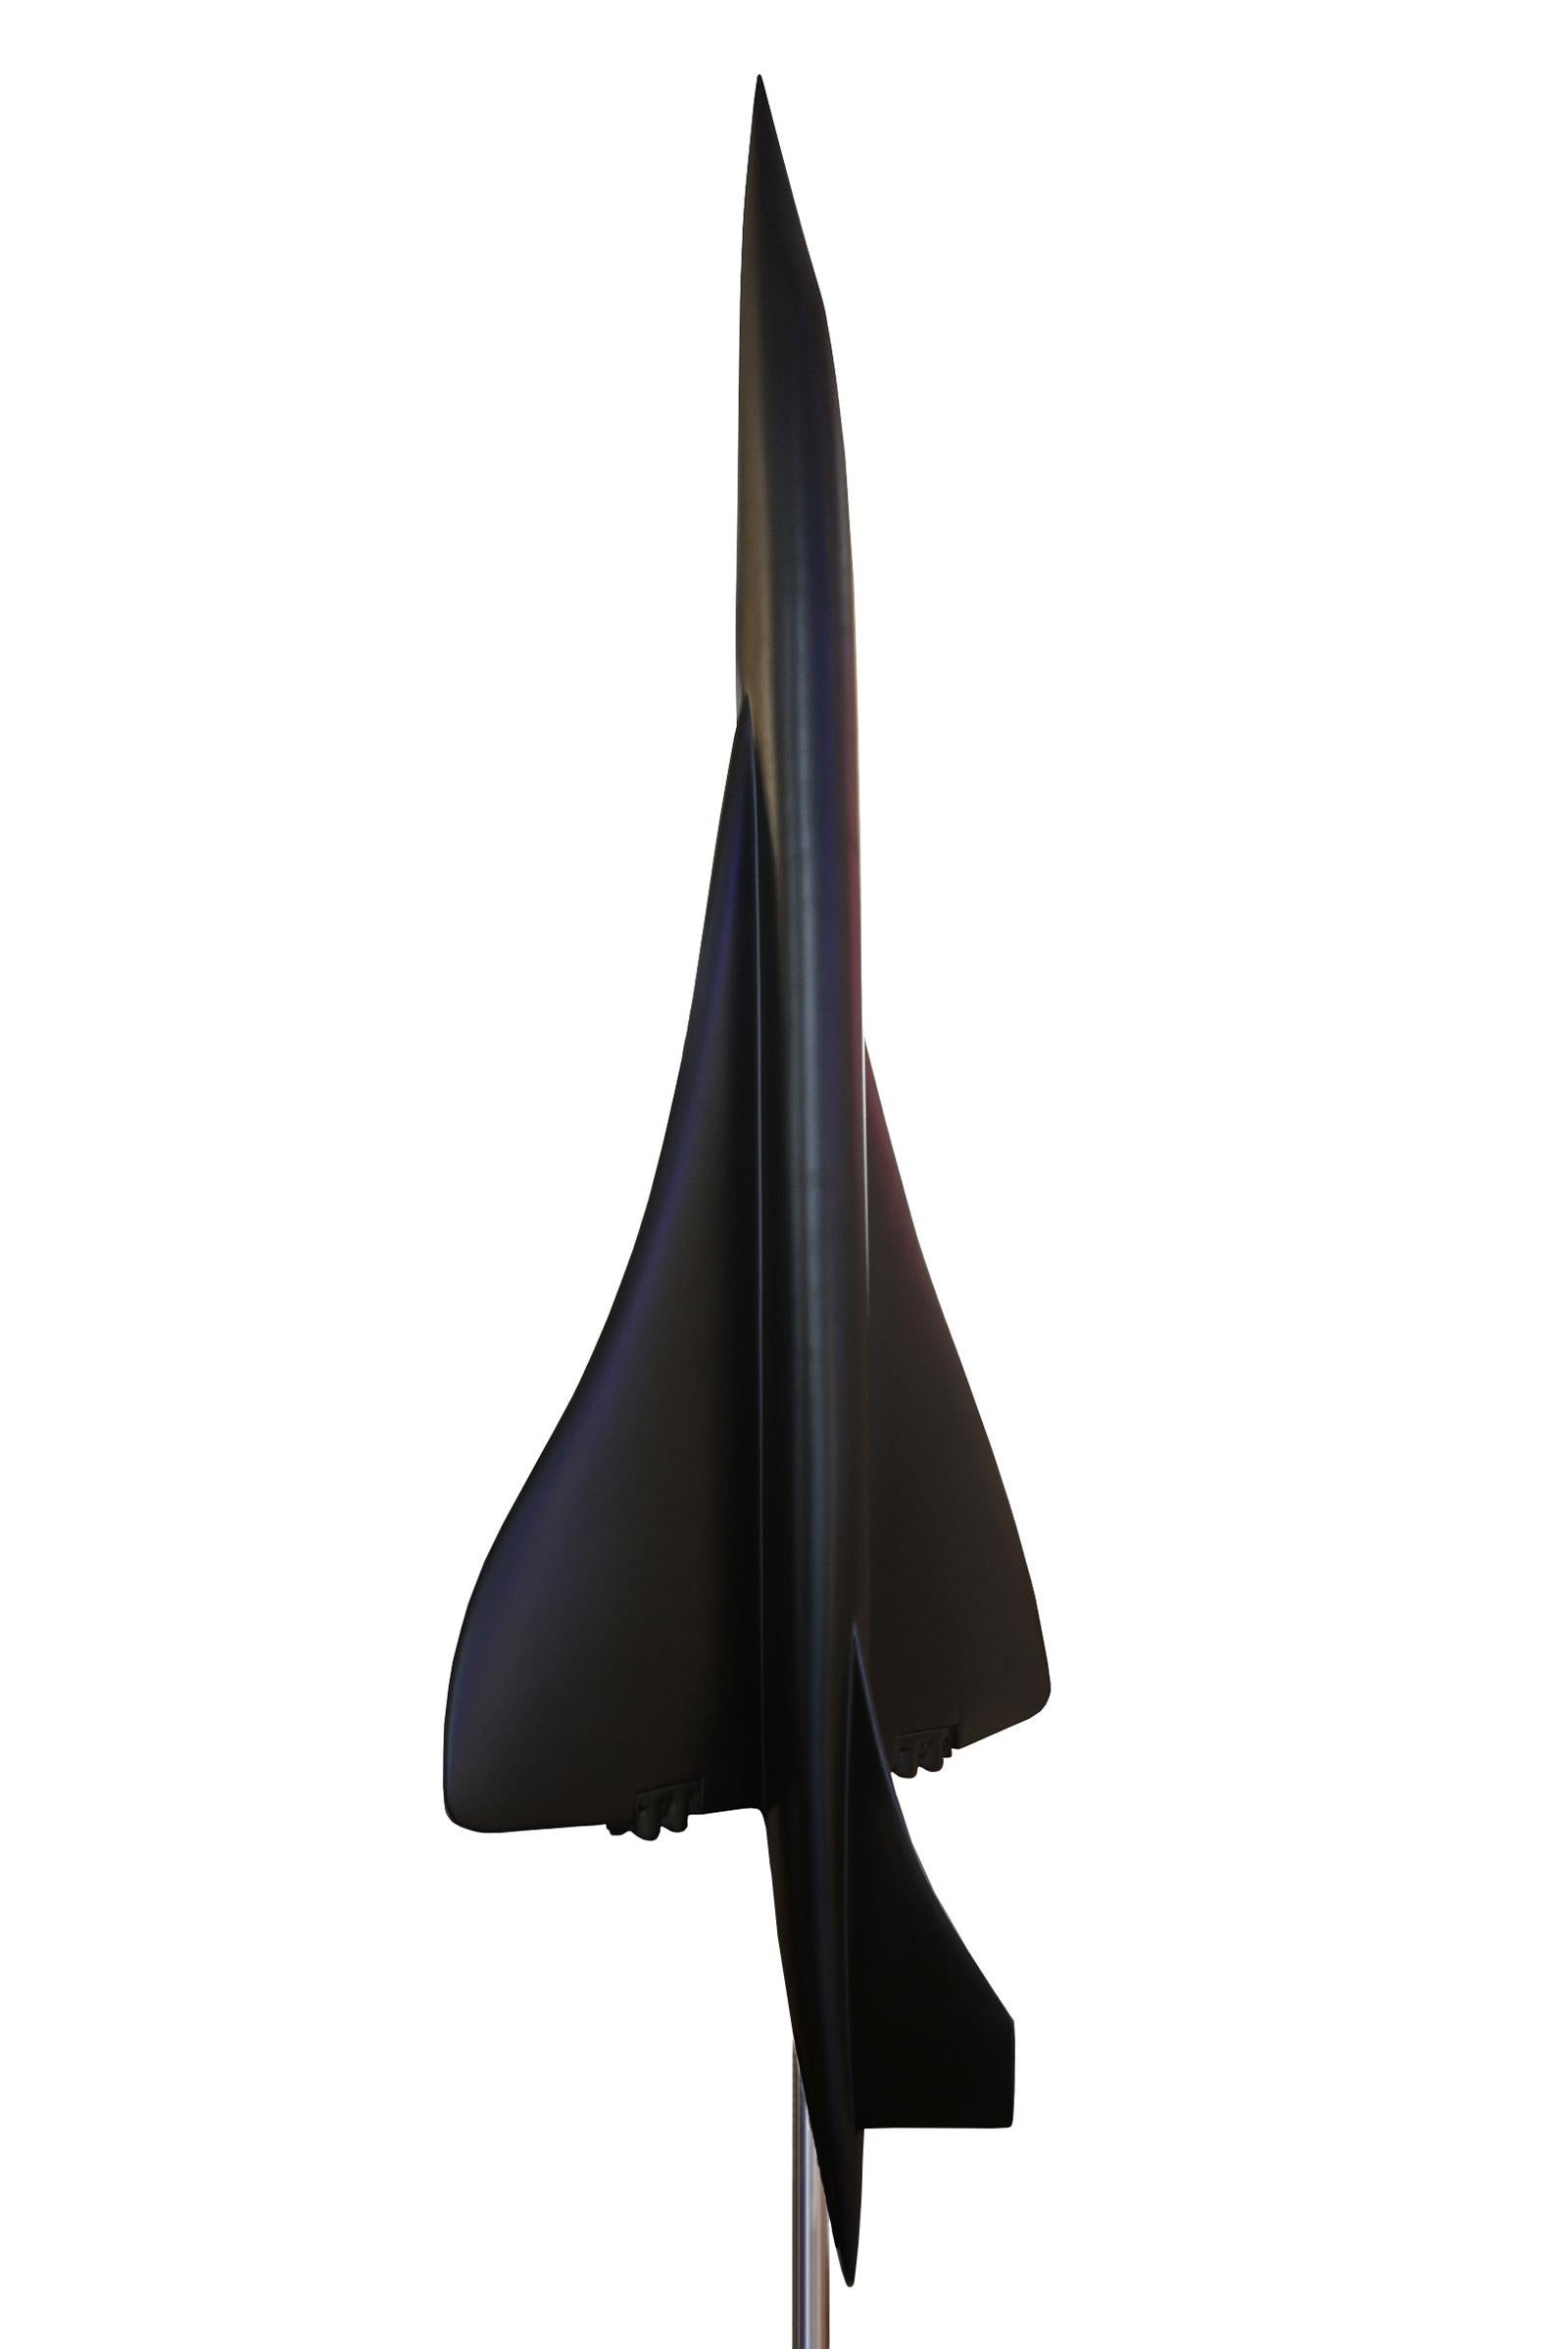 Concorde-Modell Schwarze Skulptur (Gegossen) im Angebot